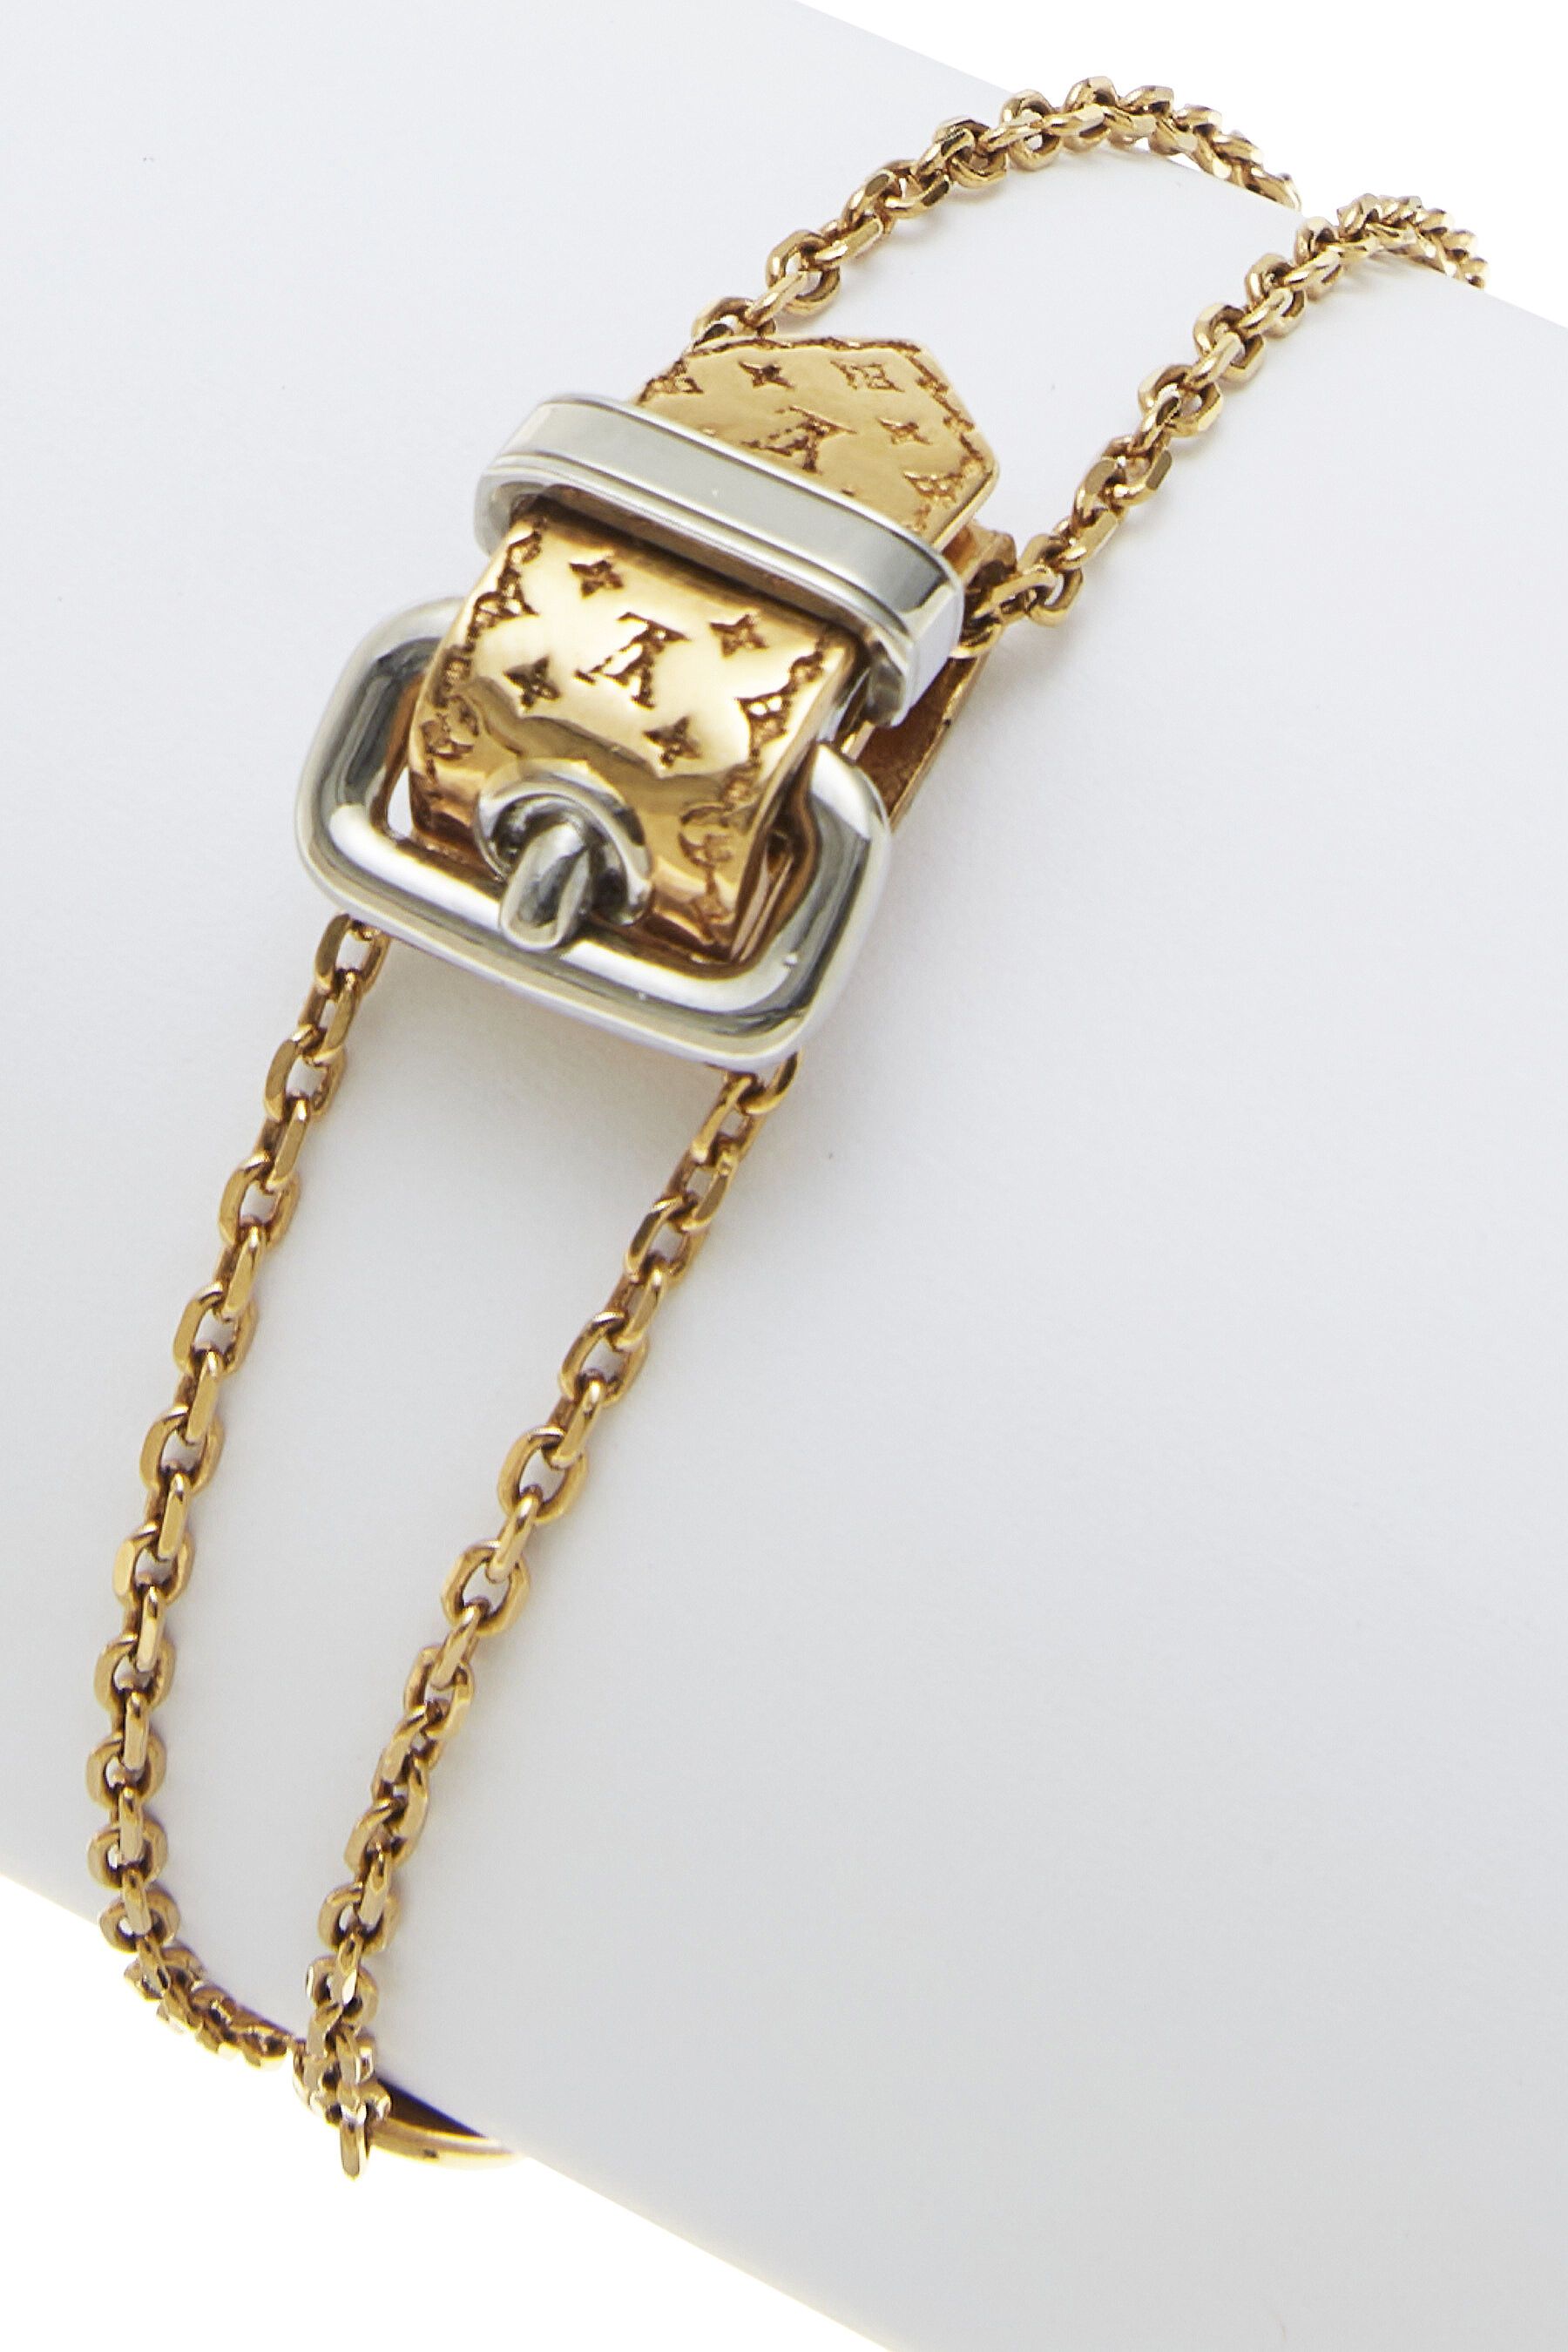 Louis Vuitton, Nanogram cuff bracelet. Marked Louis Vuitton